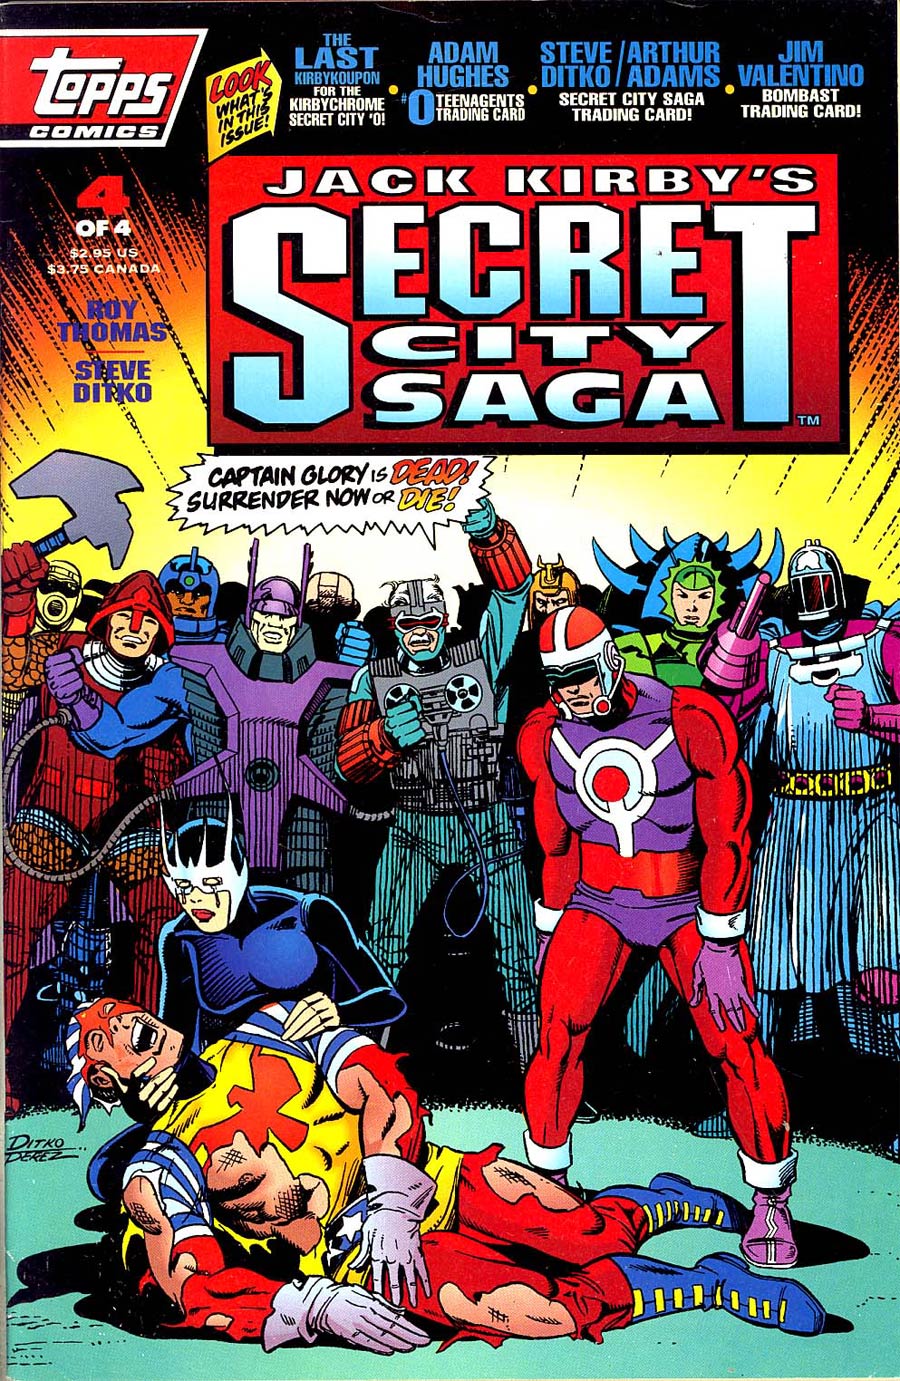 Jack Kirbys Secret City Saga #4 Cover B Without Polybag